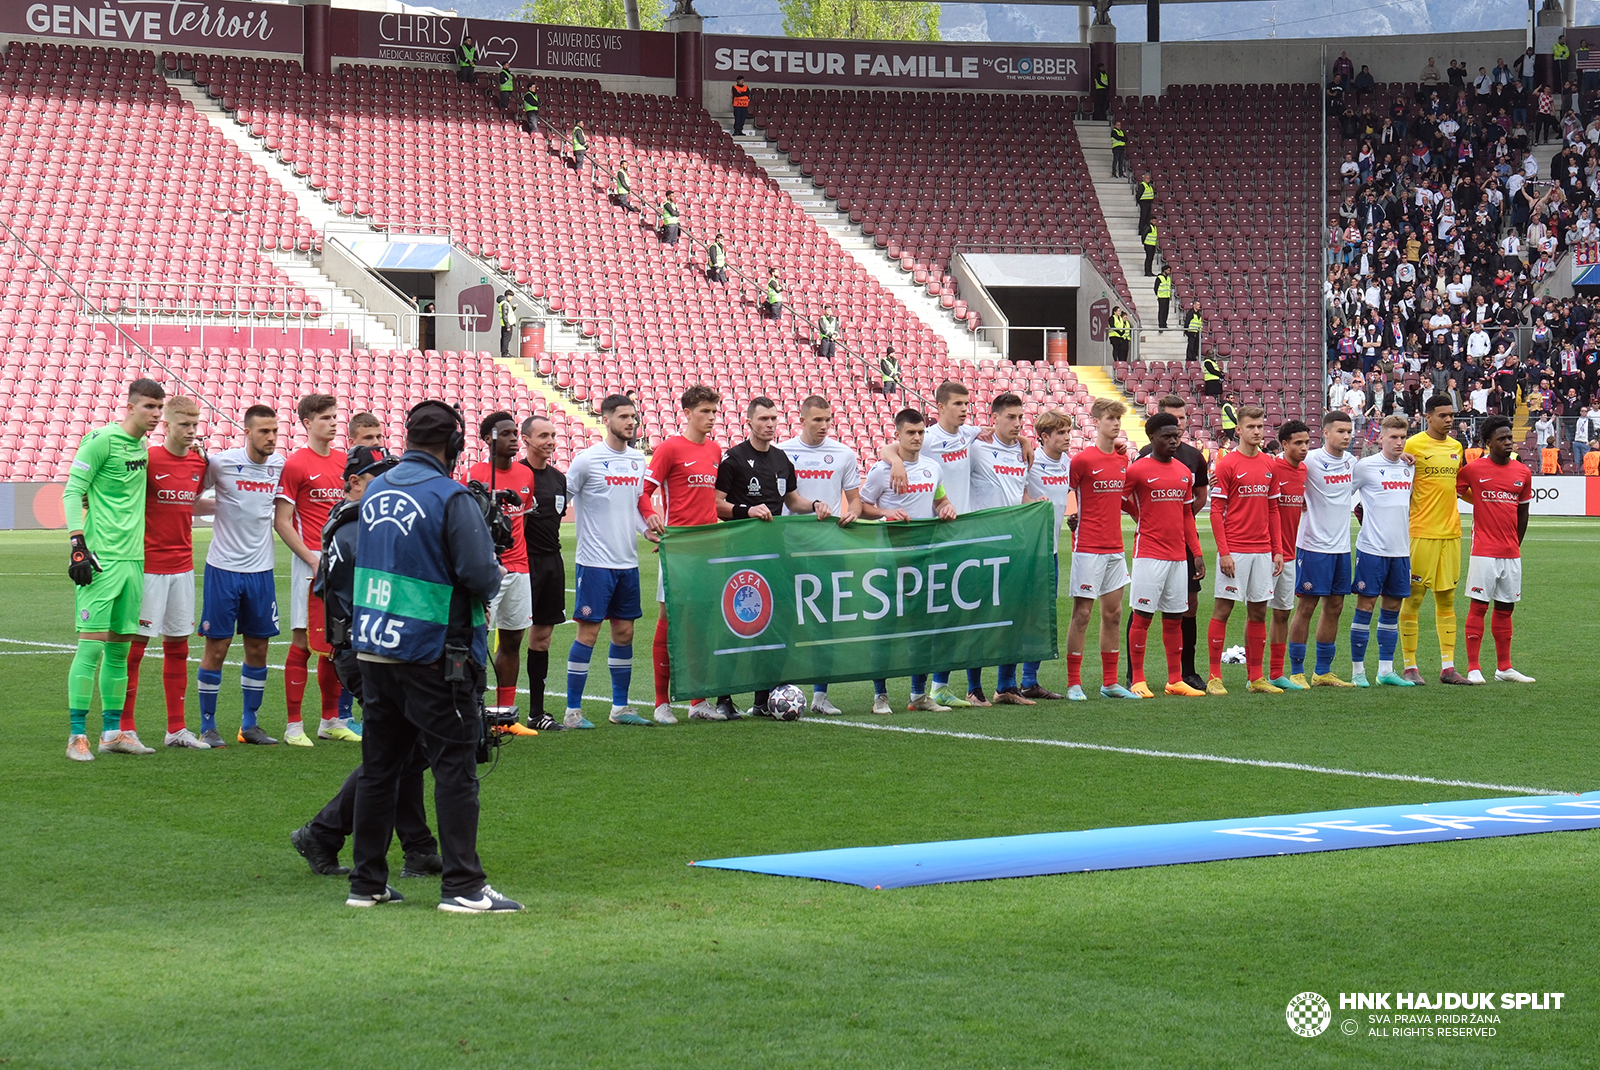 UEFA Youth League final highlights, report: AZ Alkmaar 5-0 Hajduk Split, UEFA Youth League